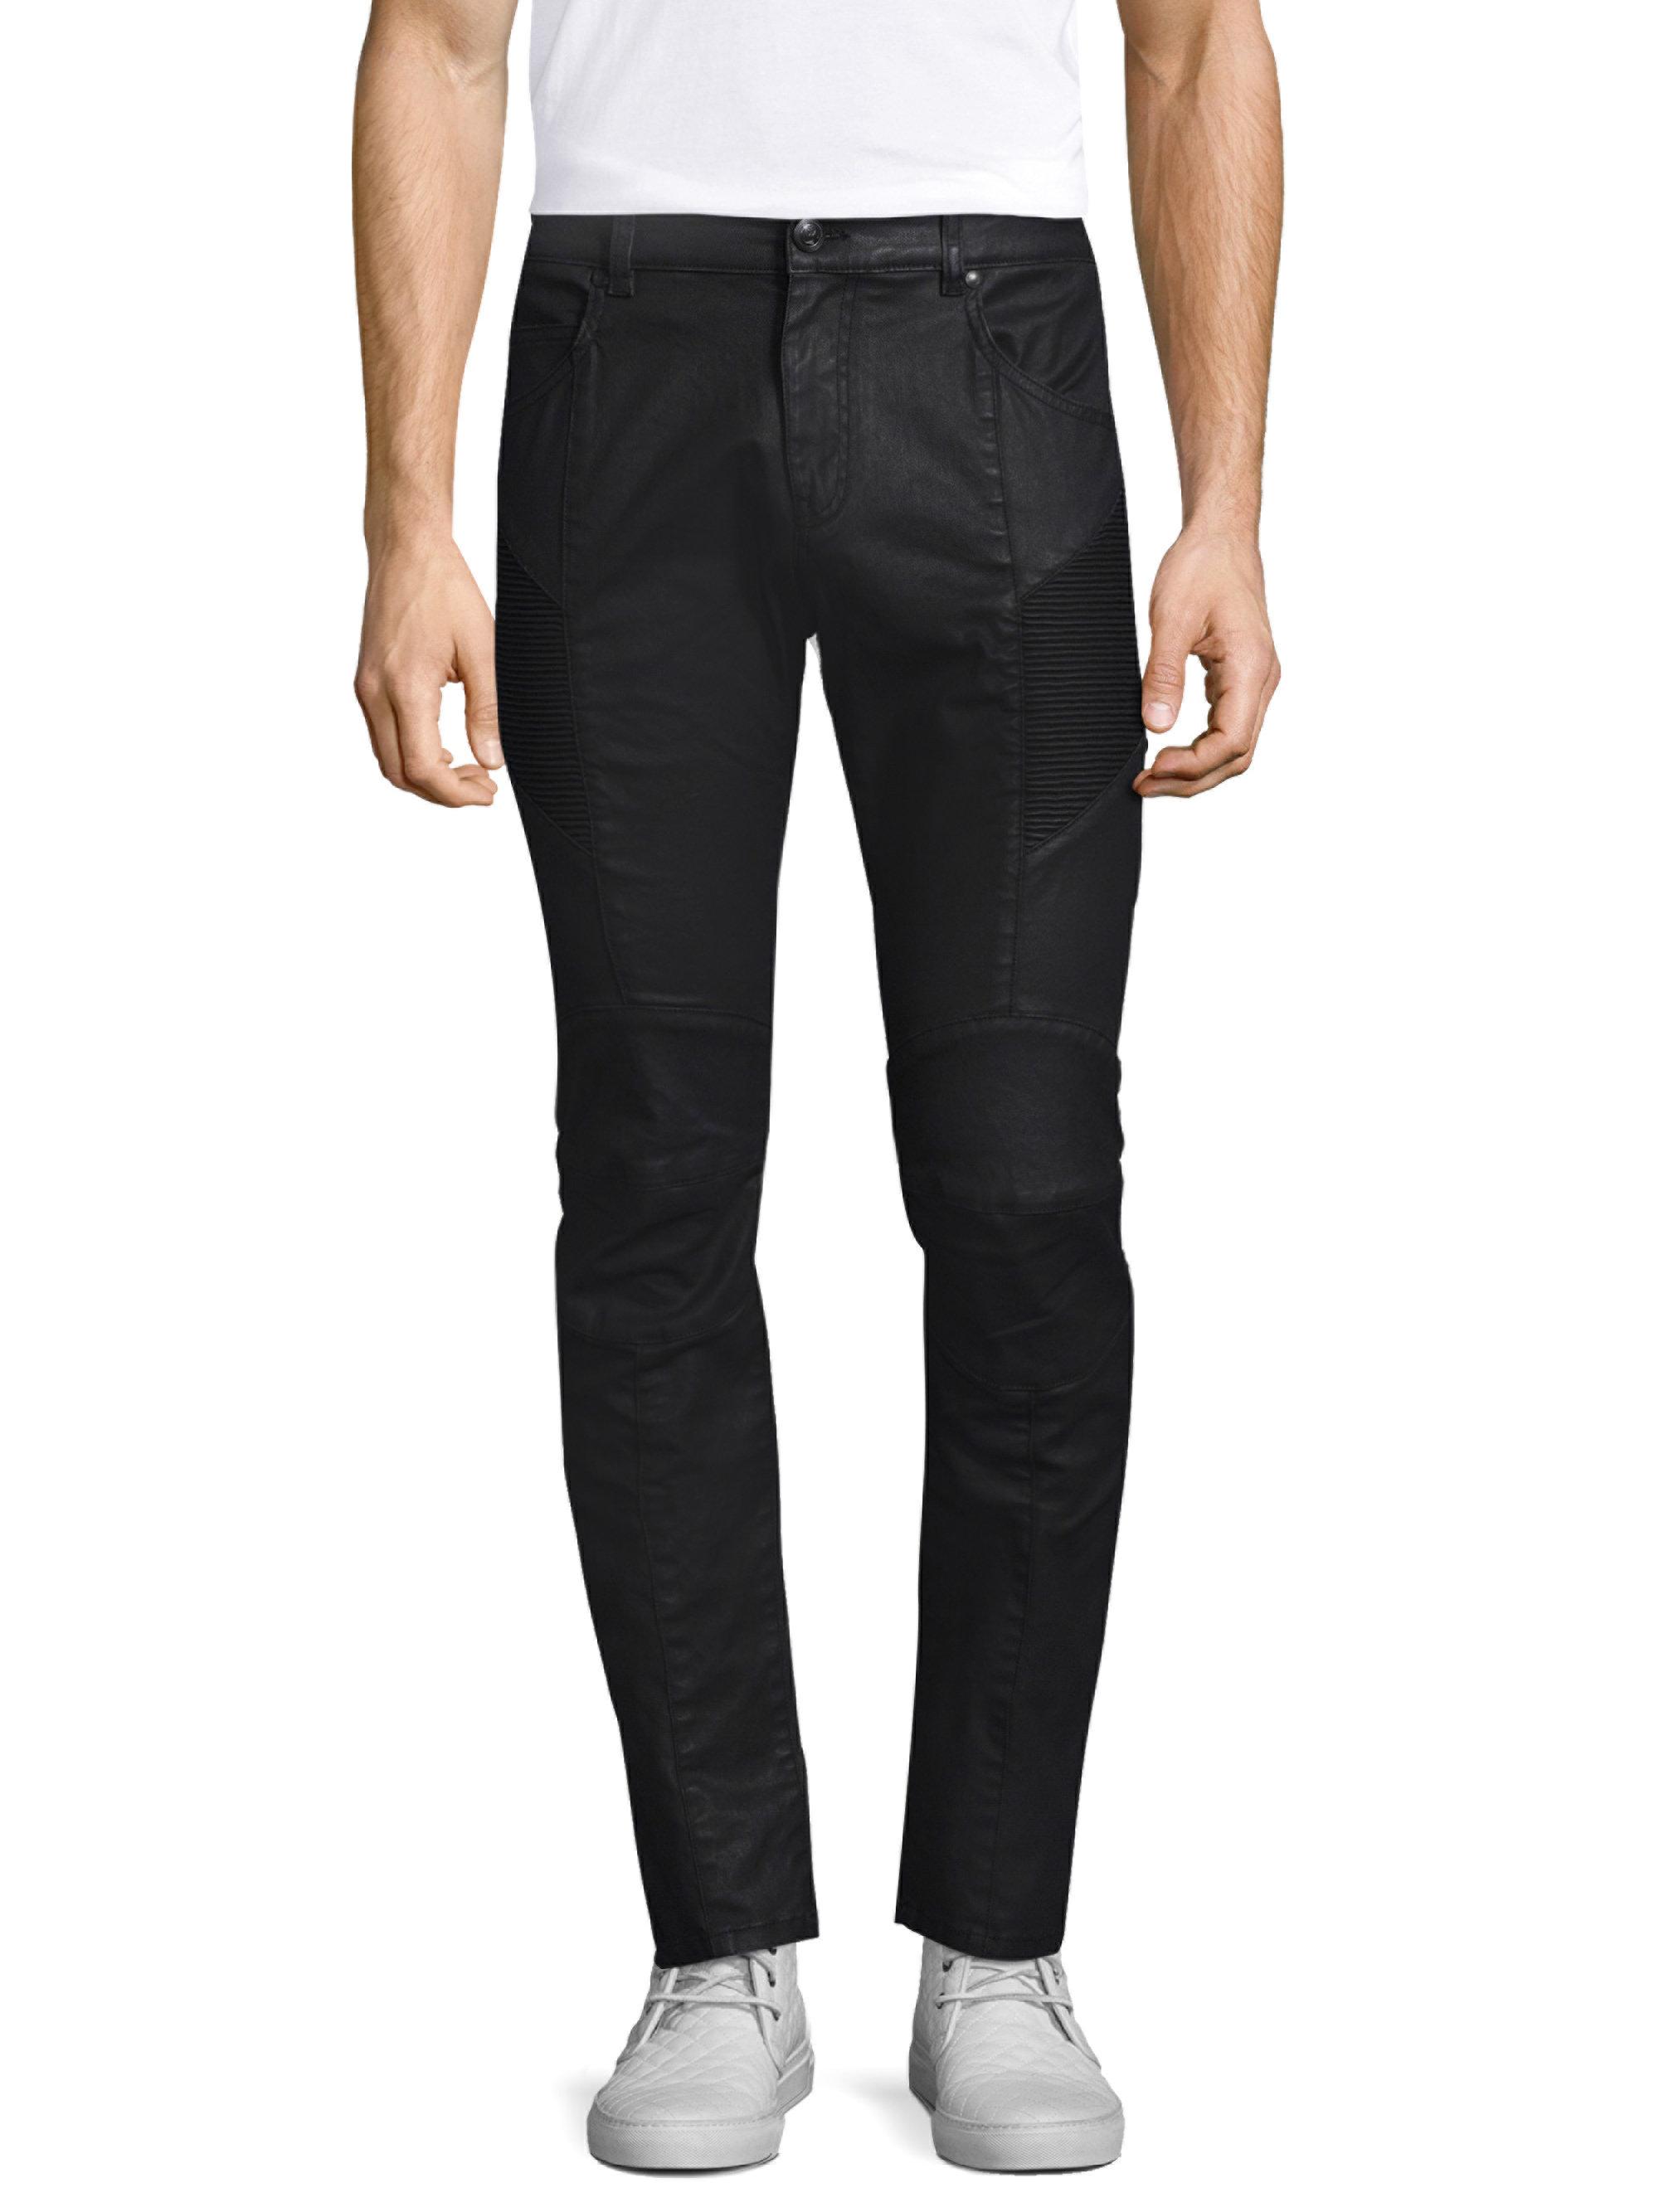 Lyst - Balmain Coated Denim Jeans in Black for Men